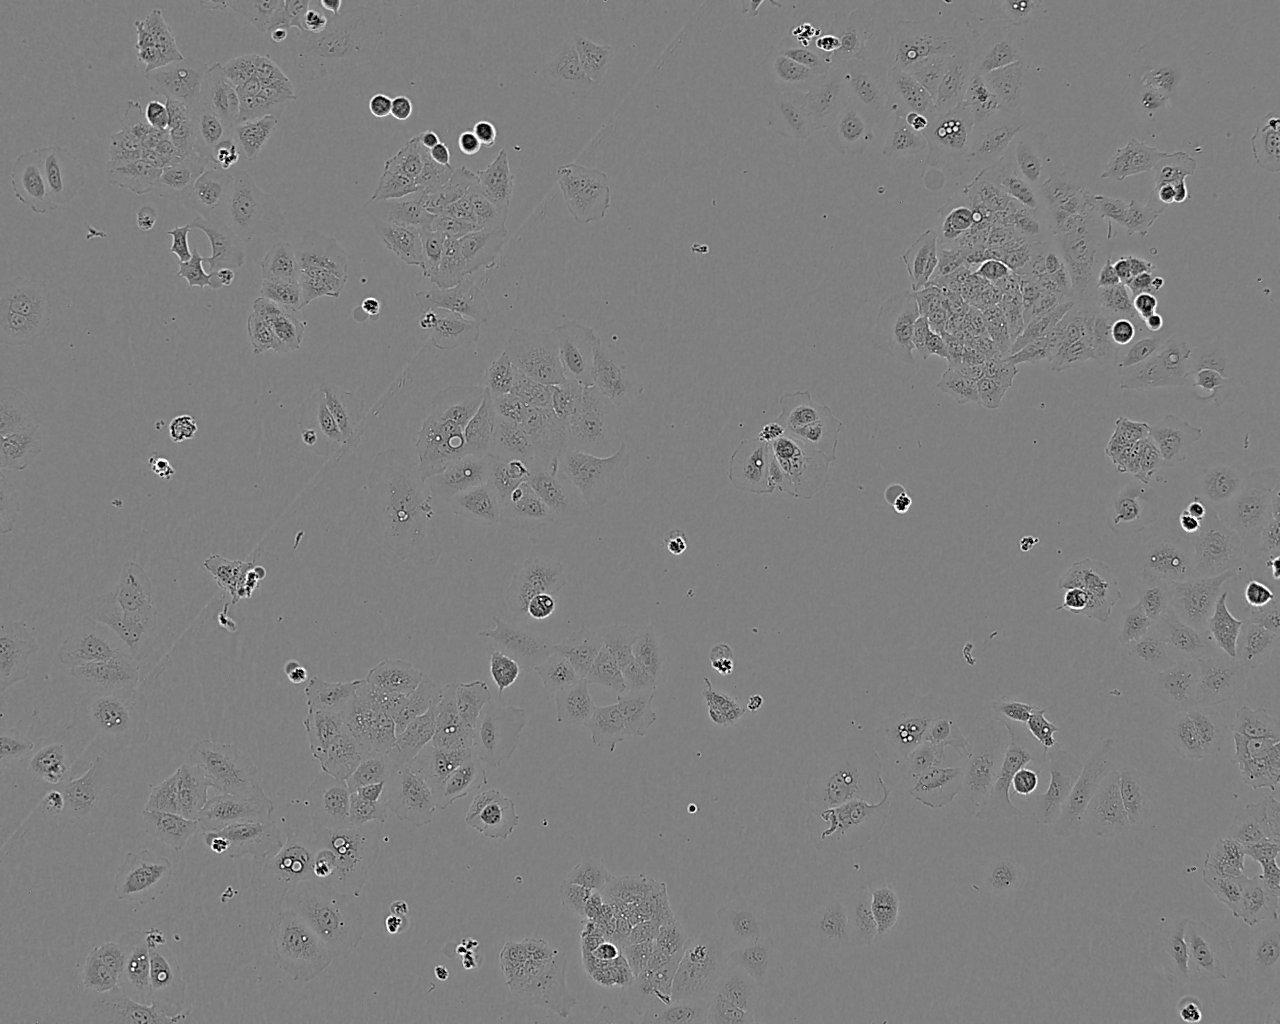 MARC-145 Cell:猴胚胎肾上皮细胞系